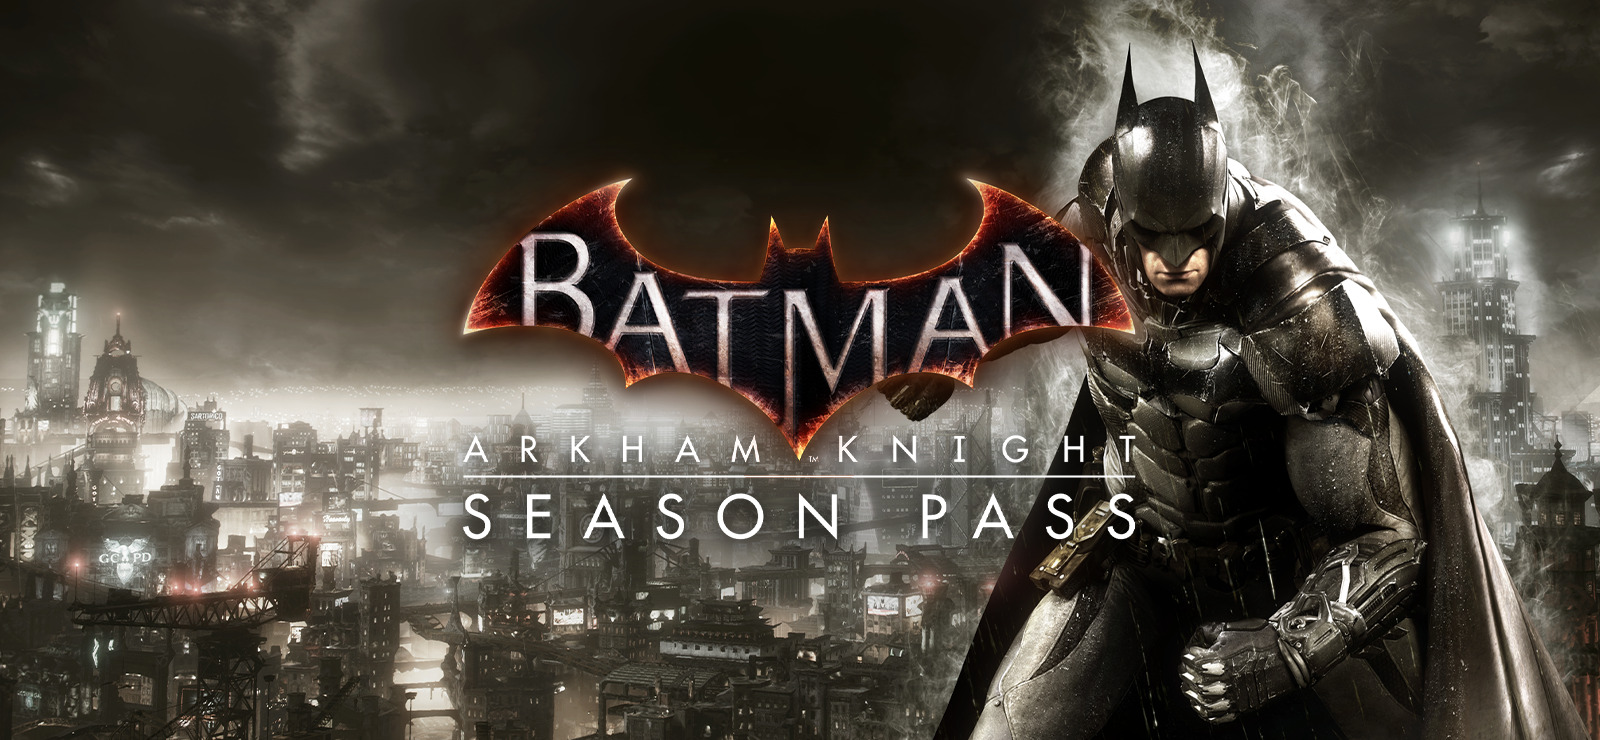 Batman™: Arkham Knight Season Pass on GOG.com